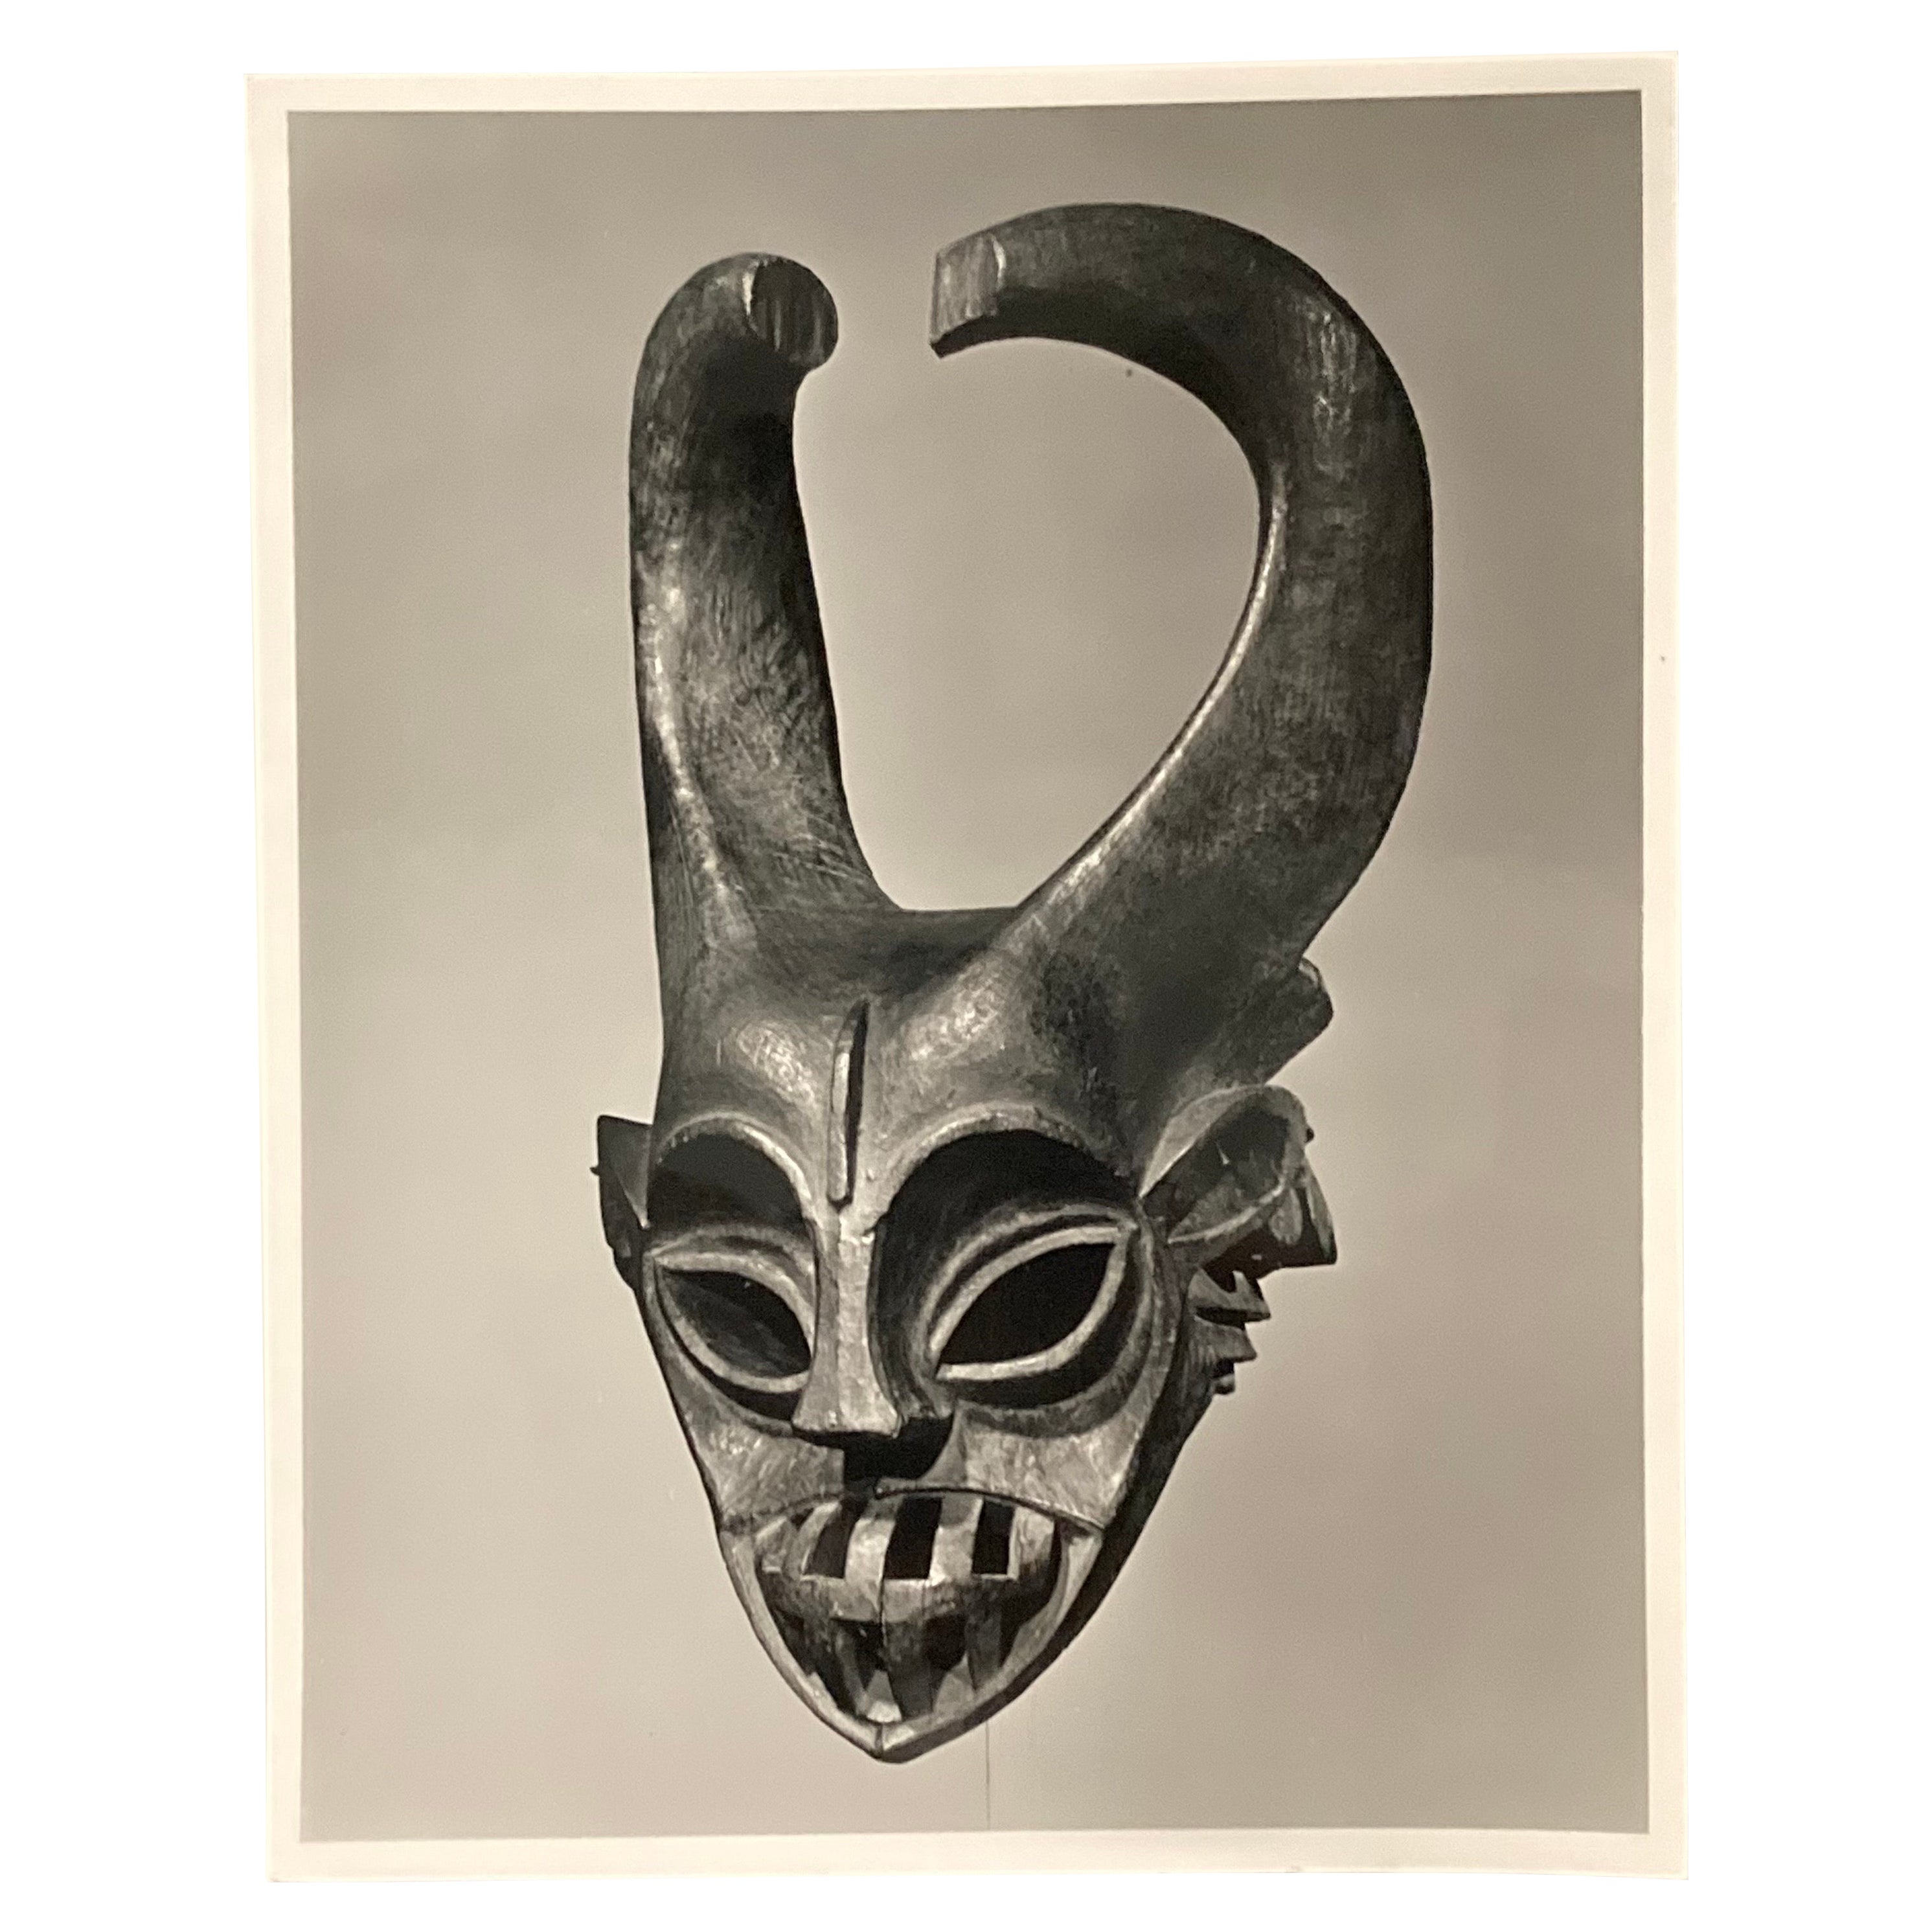 F. L. Kennett, "Mask", original 1950s black and white modernist photograph